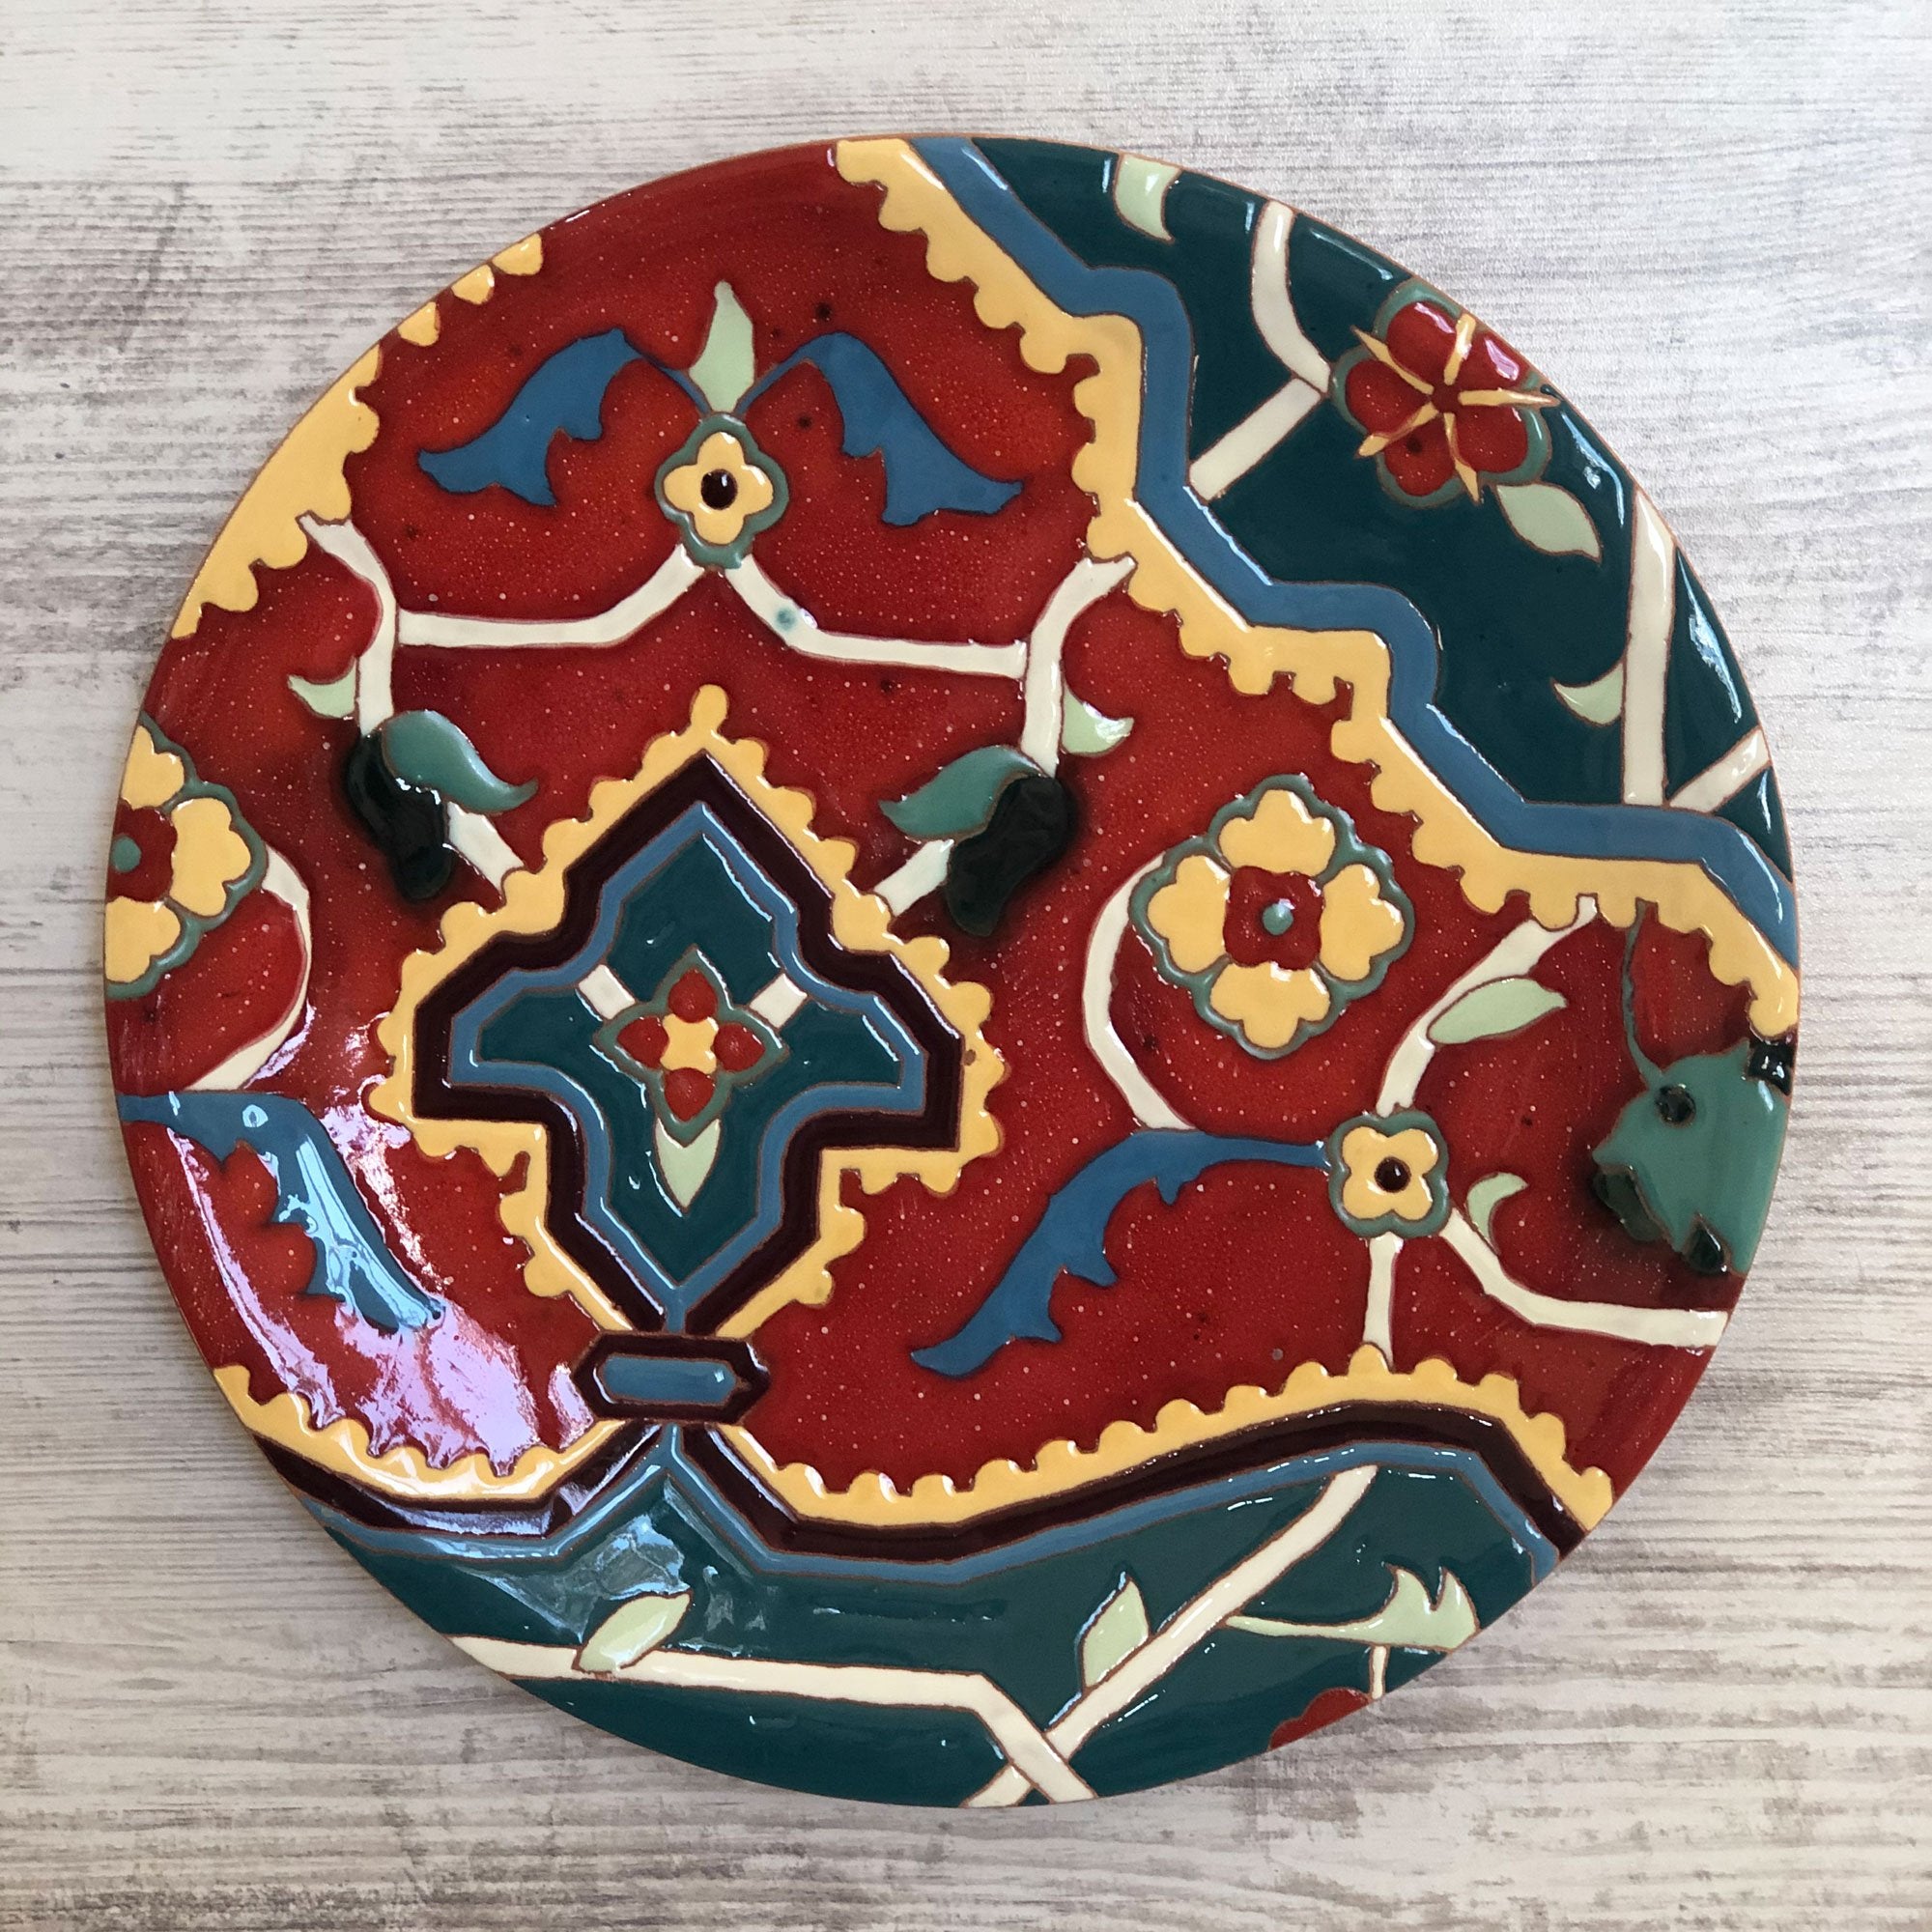 Ceramic Plate with Armenian Carpet Ornaments